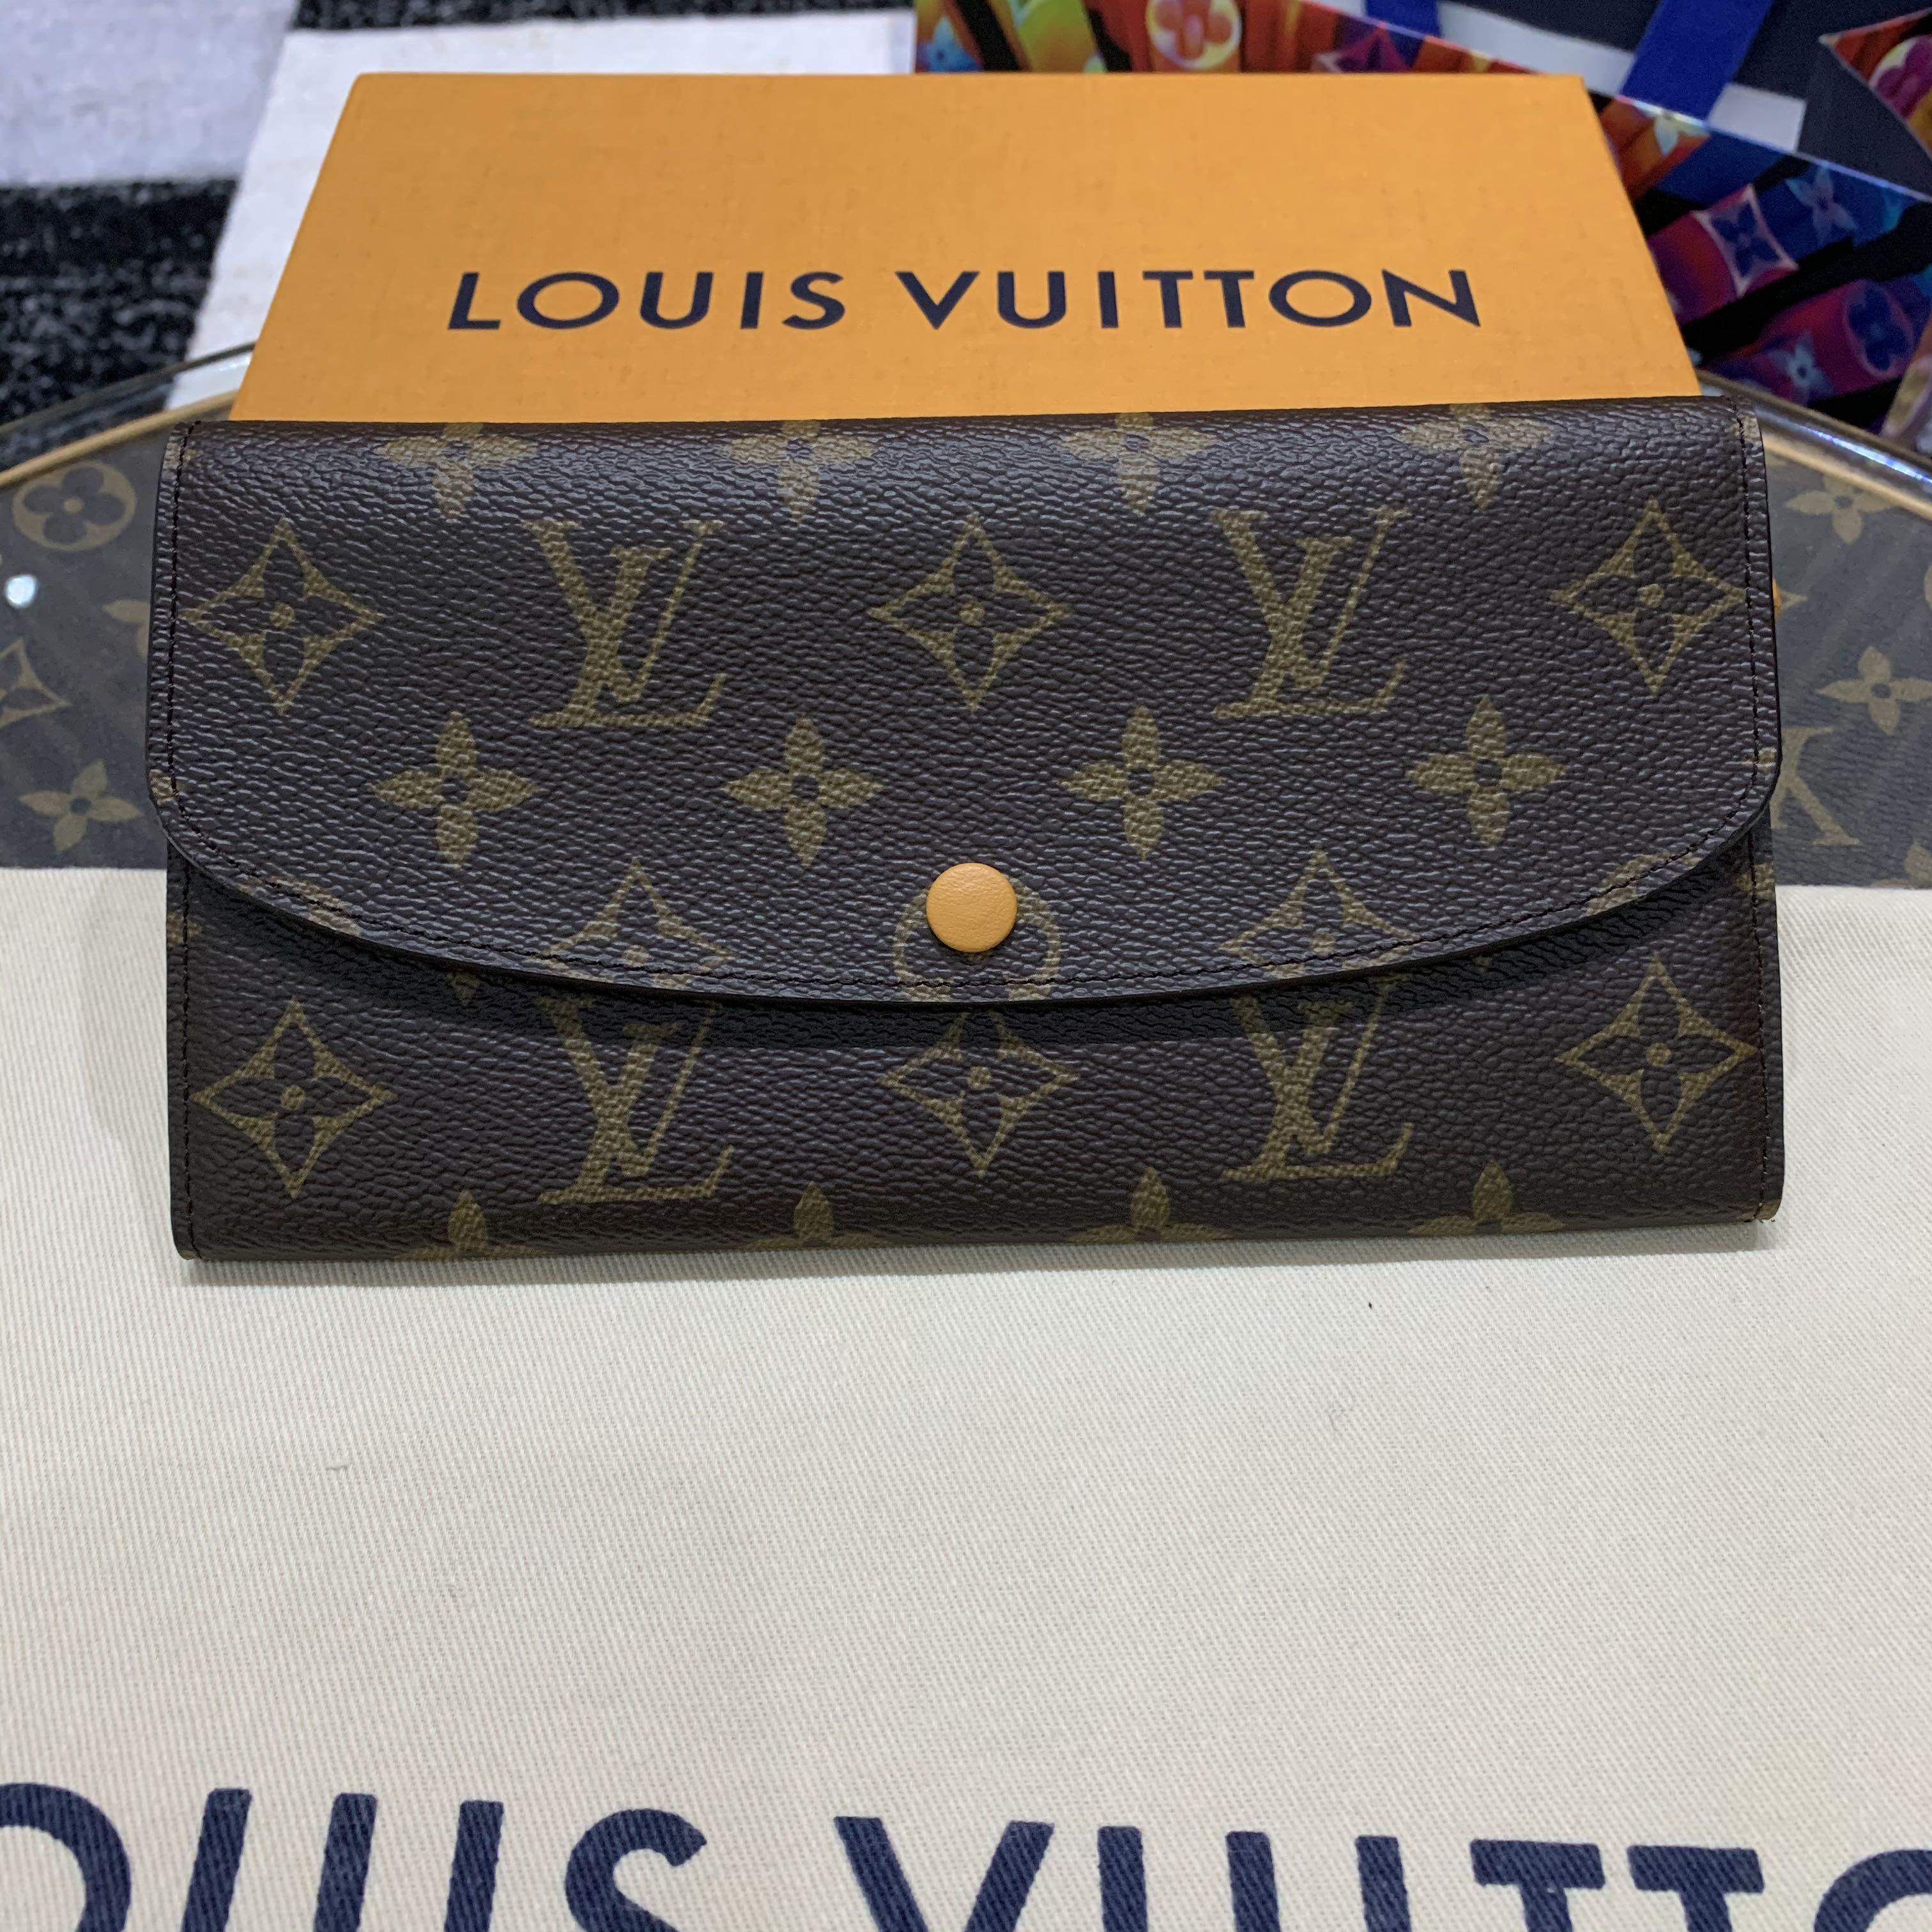 Louis Vuitton - Emilie Wallet - Monogram - Fuchsia - Women - Luxury